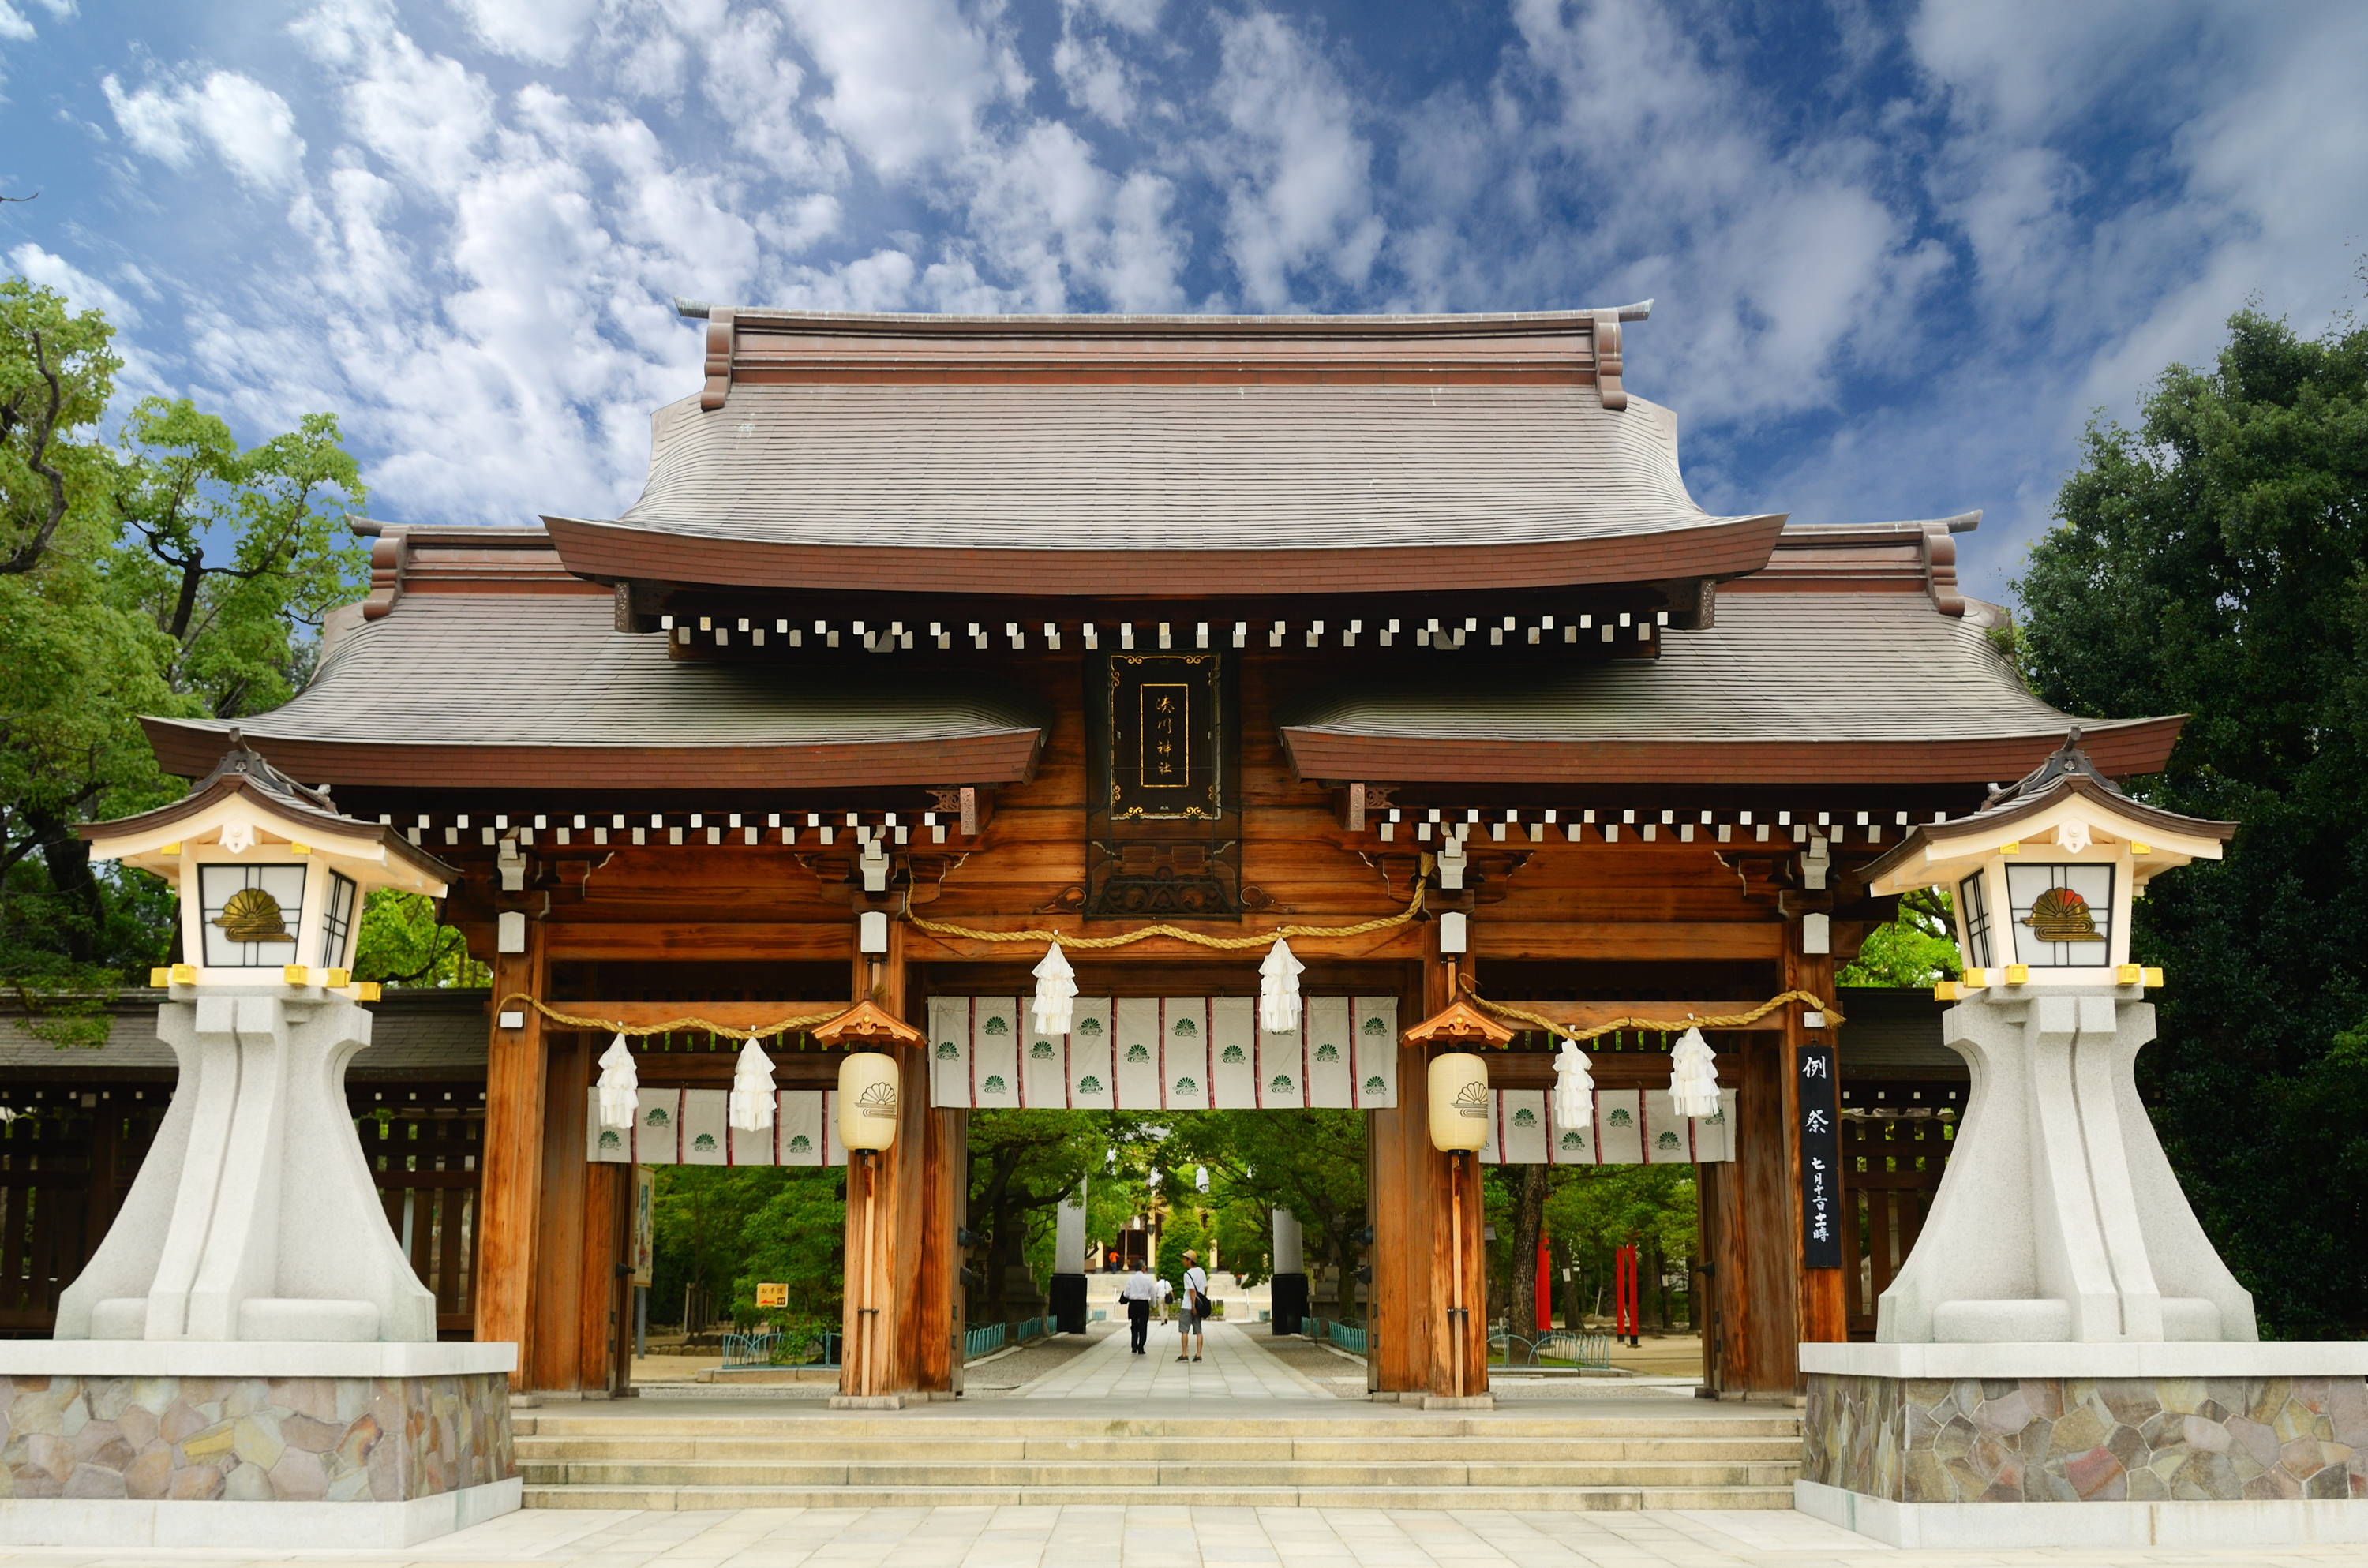 Minatogawa Shrine in Kobe, Japan